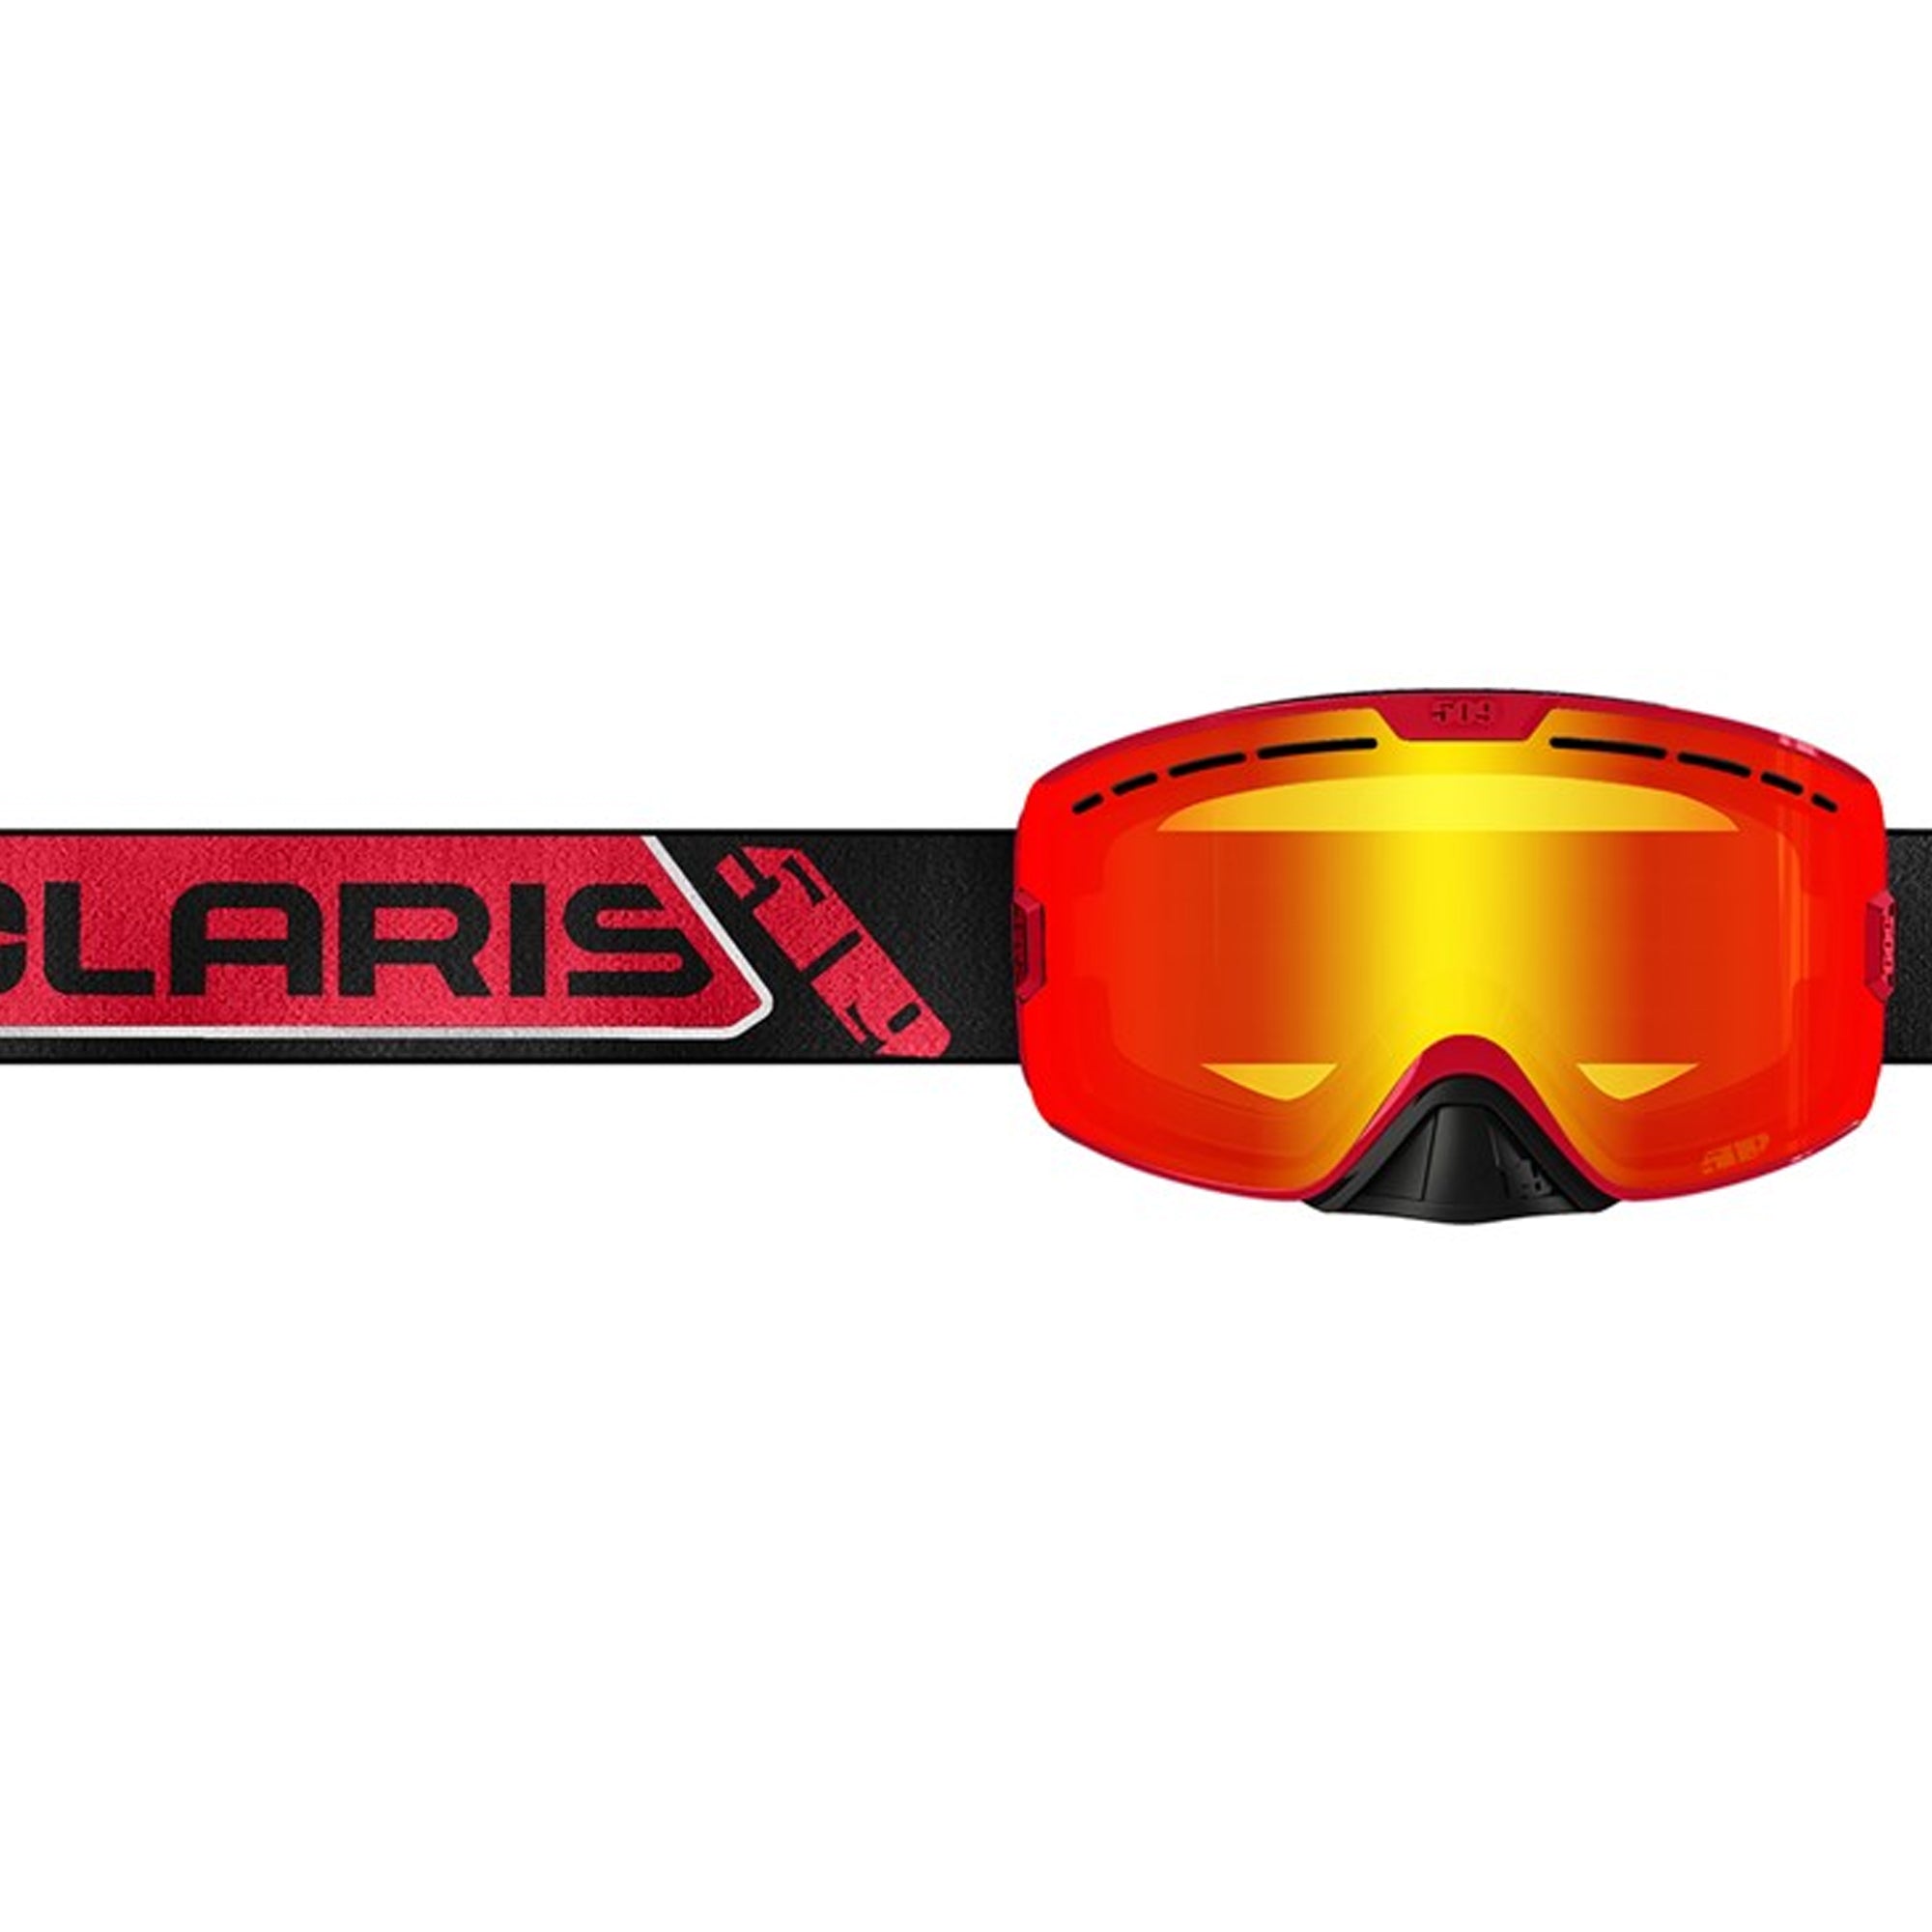 Polaris 2861477 509 Kingpin Snow Goggles